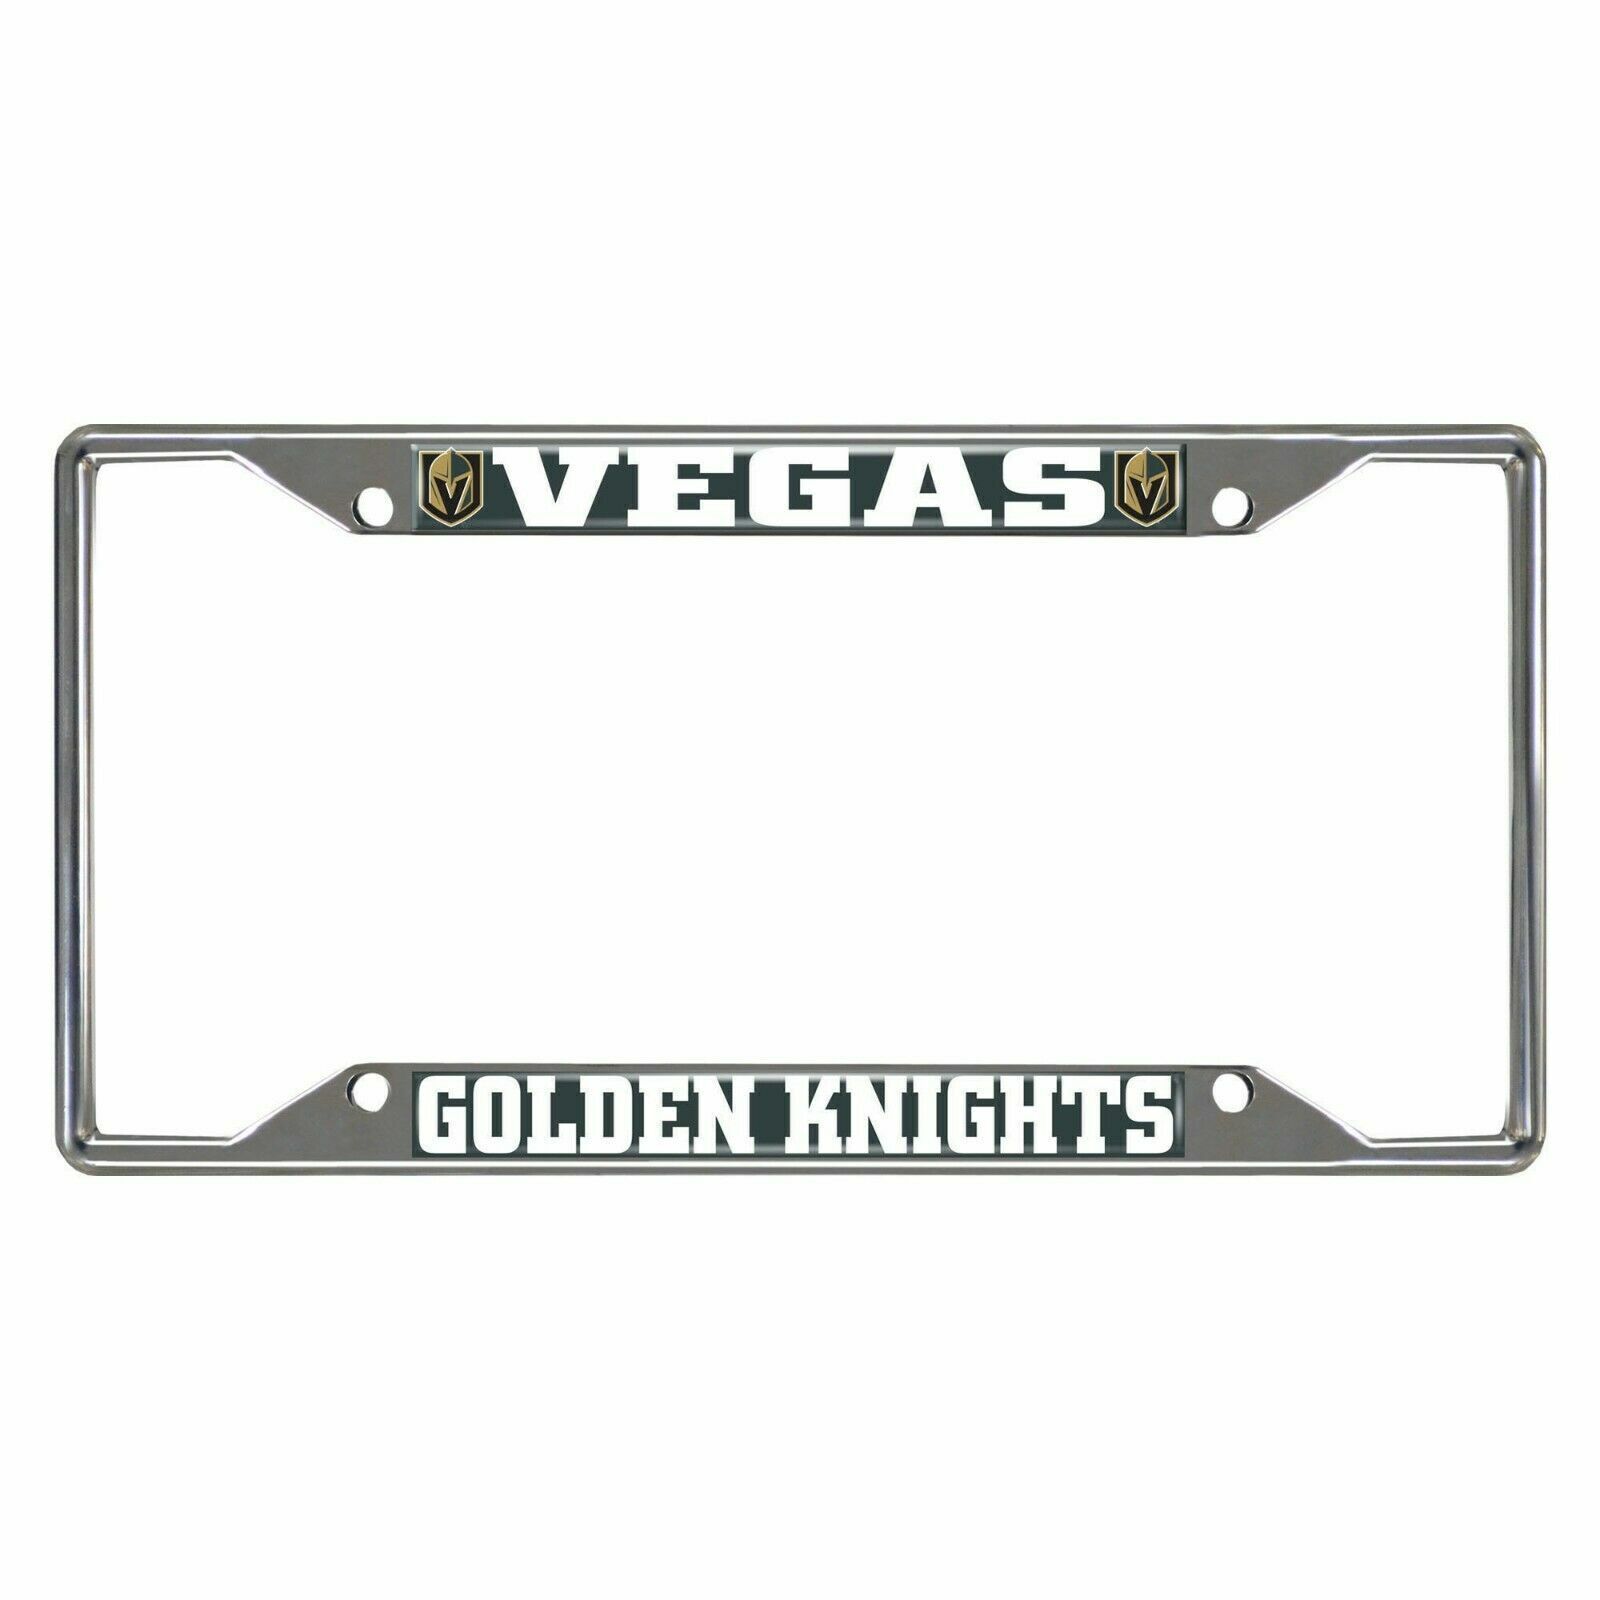 NEW NHL Las Vegas Golden Knights Car Truck Chrome Metal License Plate Frame